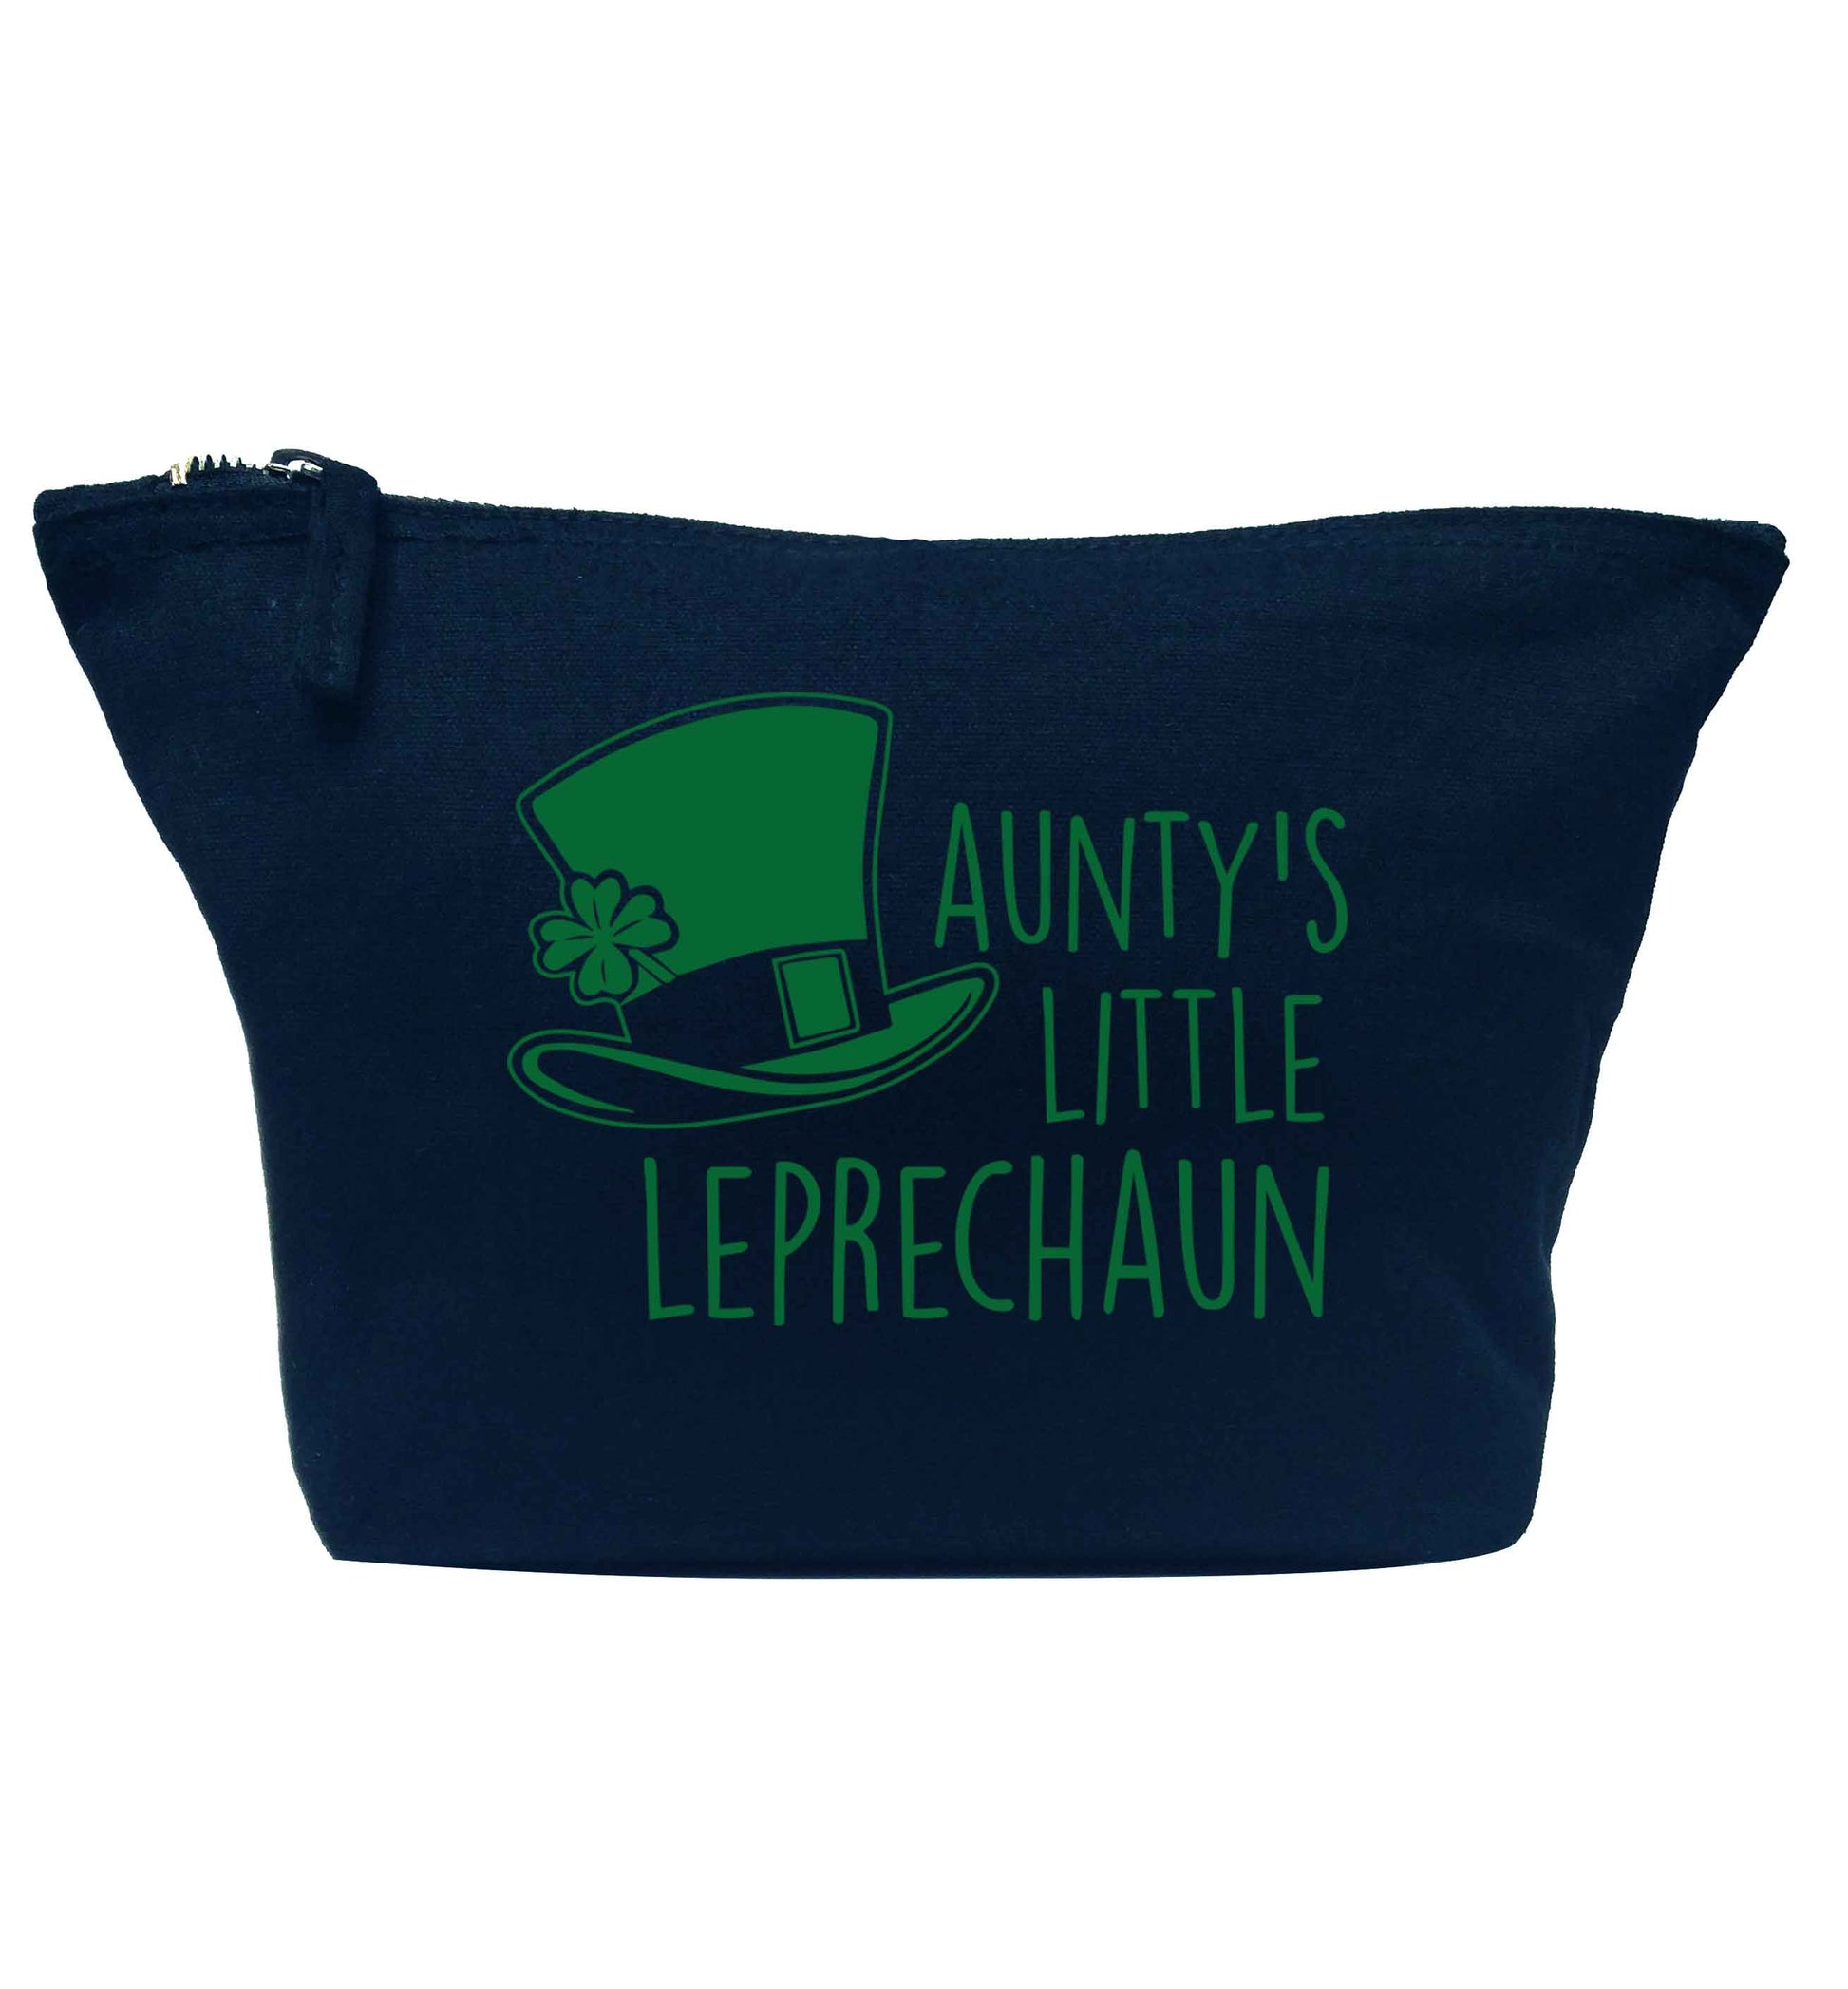 Aunty's little leprechaun navy makeup bag